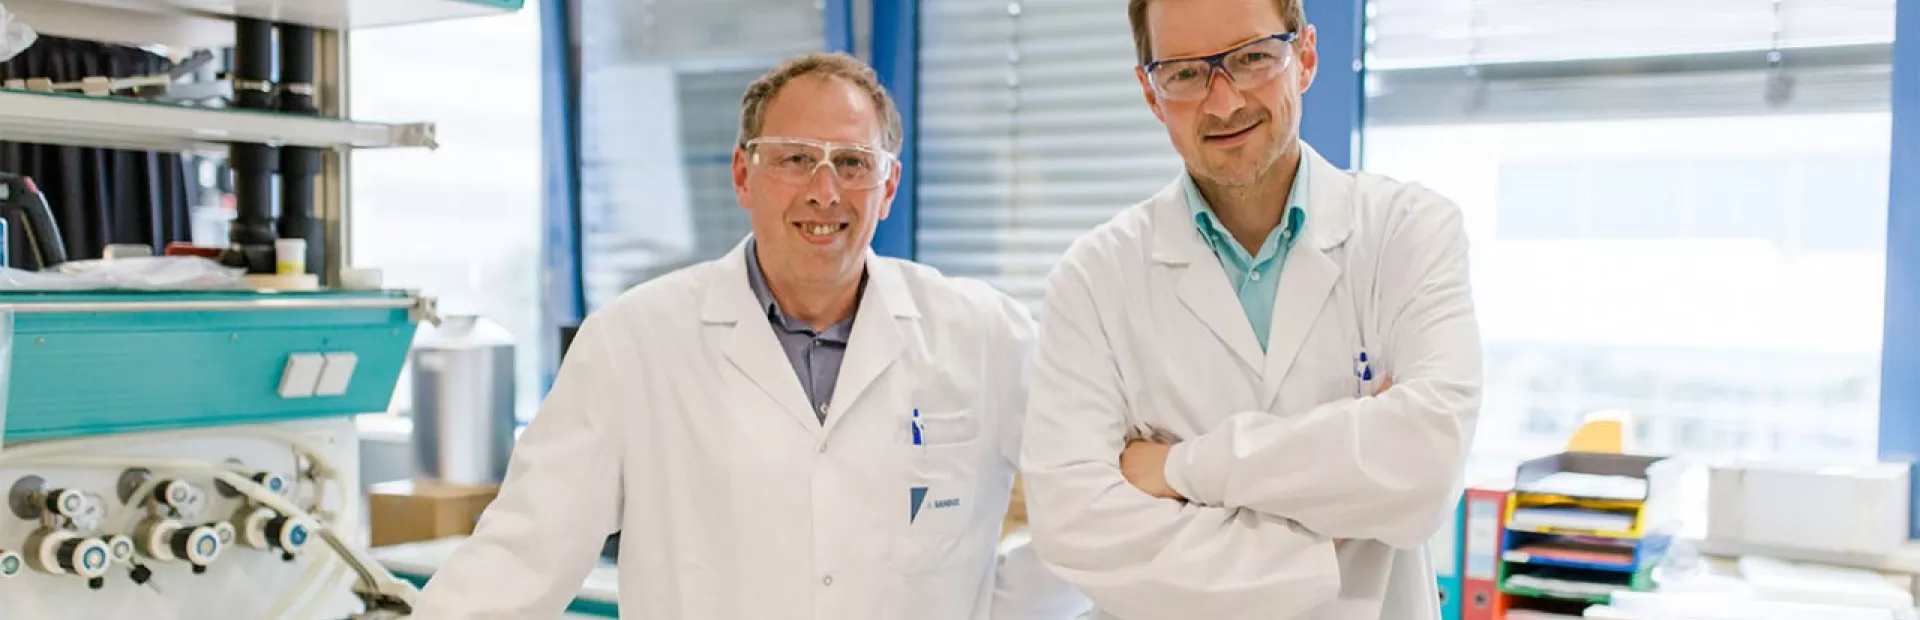 Robert Gschwentner and Stefan Lackner in a laboratory in Kundl, Austria